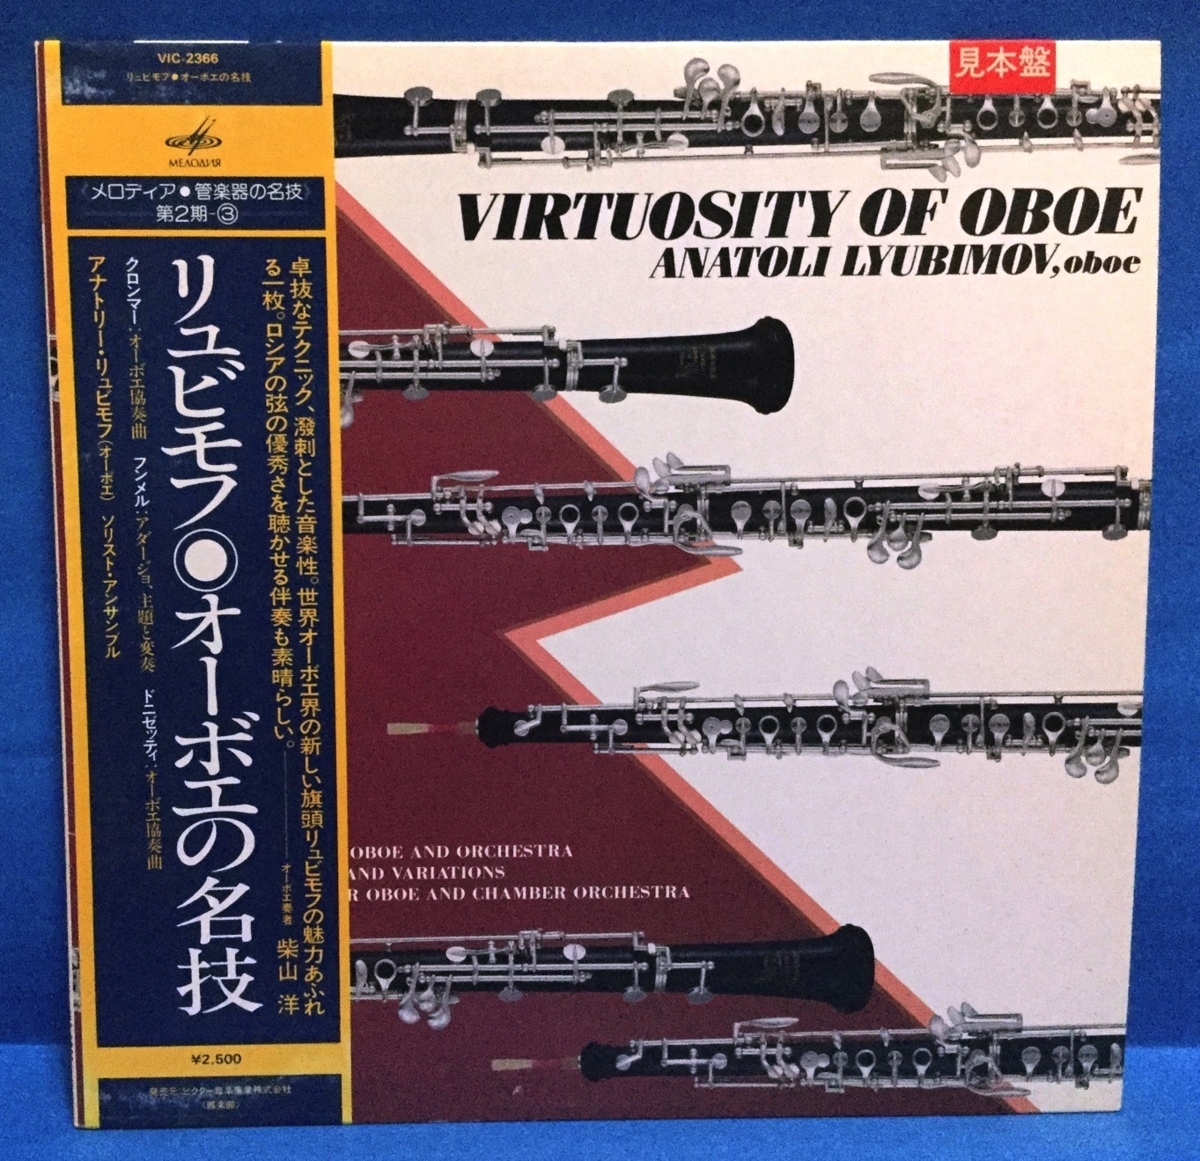 LP クラシック リュビモフ / オーボエの名技 日本盤